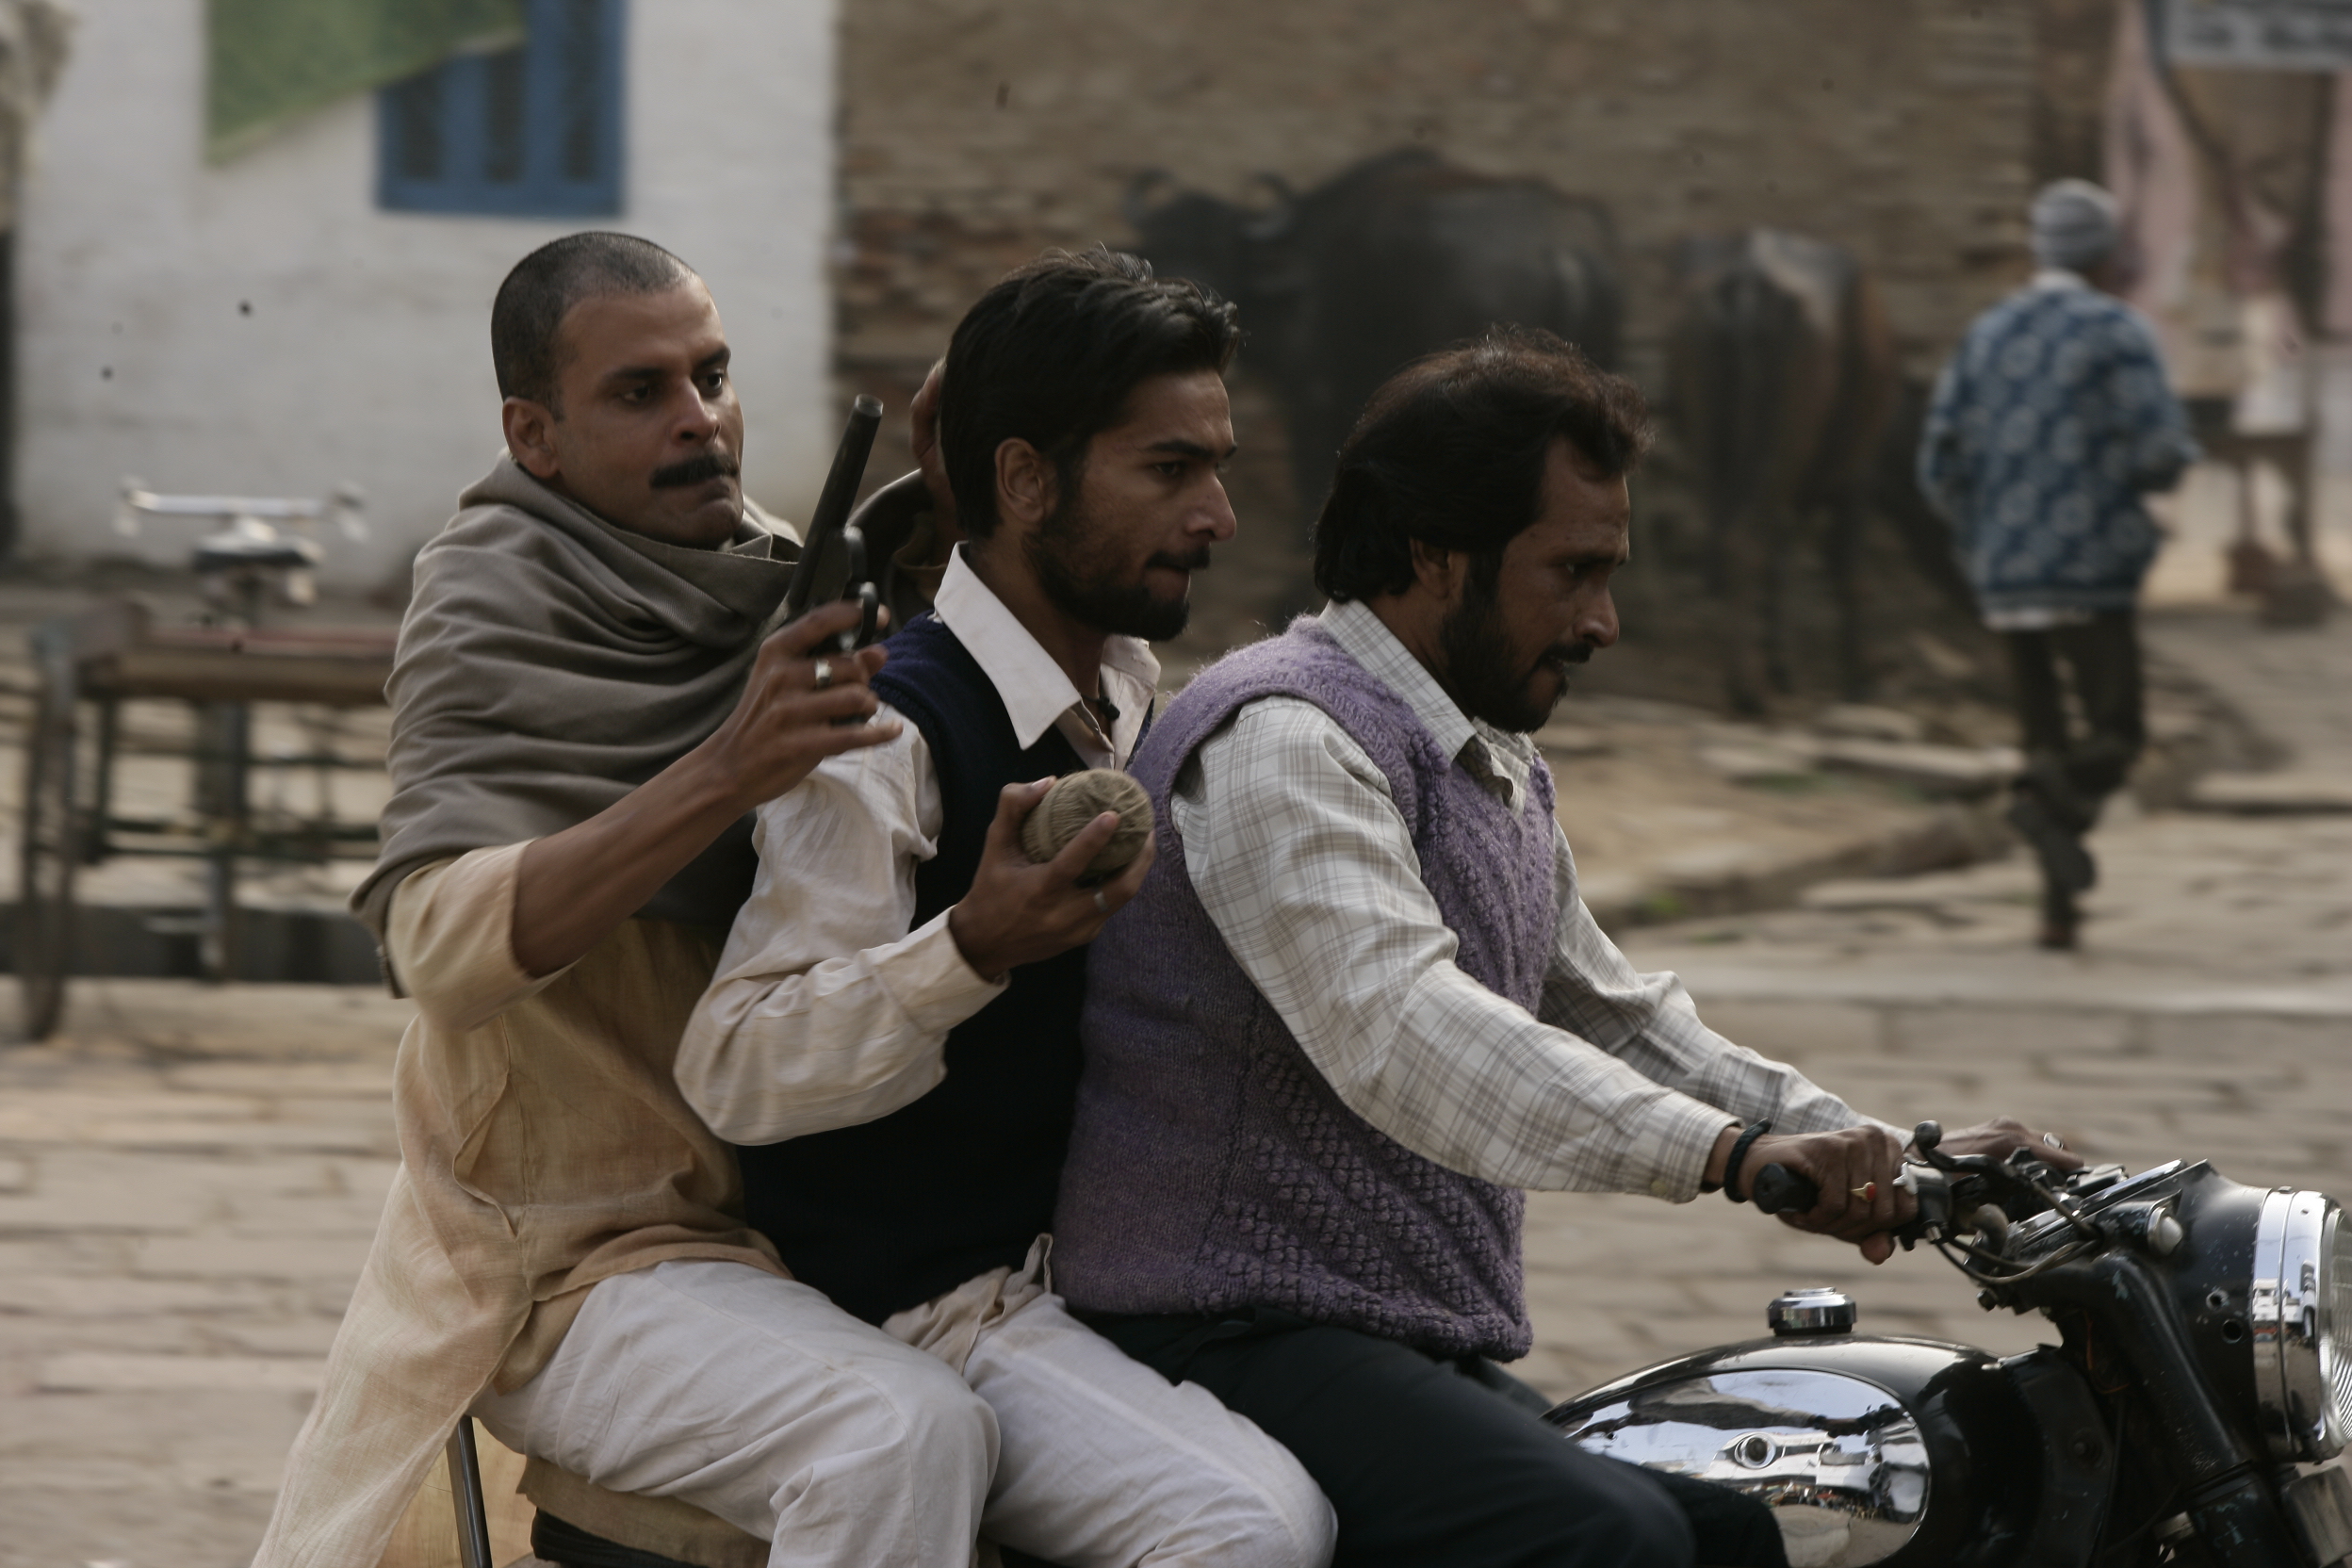 Gangs of Wasseypur is a revenge saga by Anurag Kashyap set in rural India